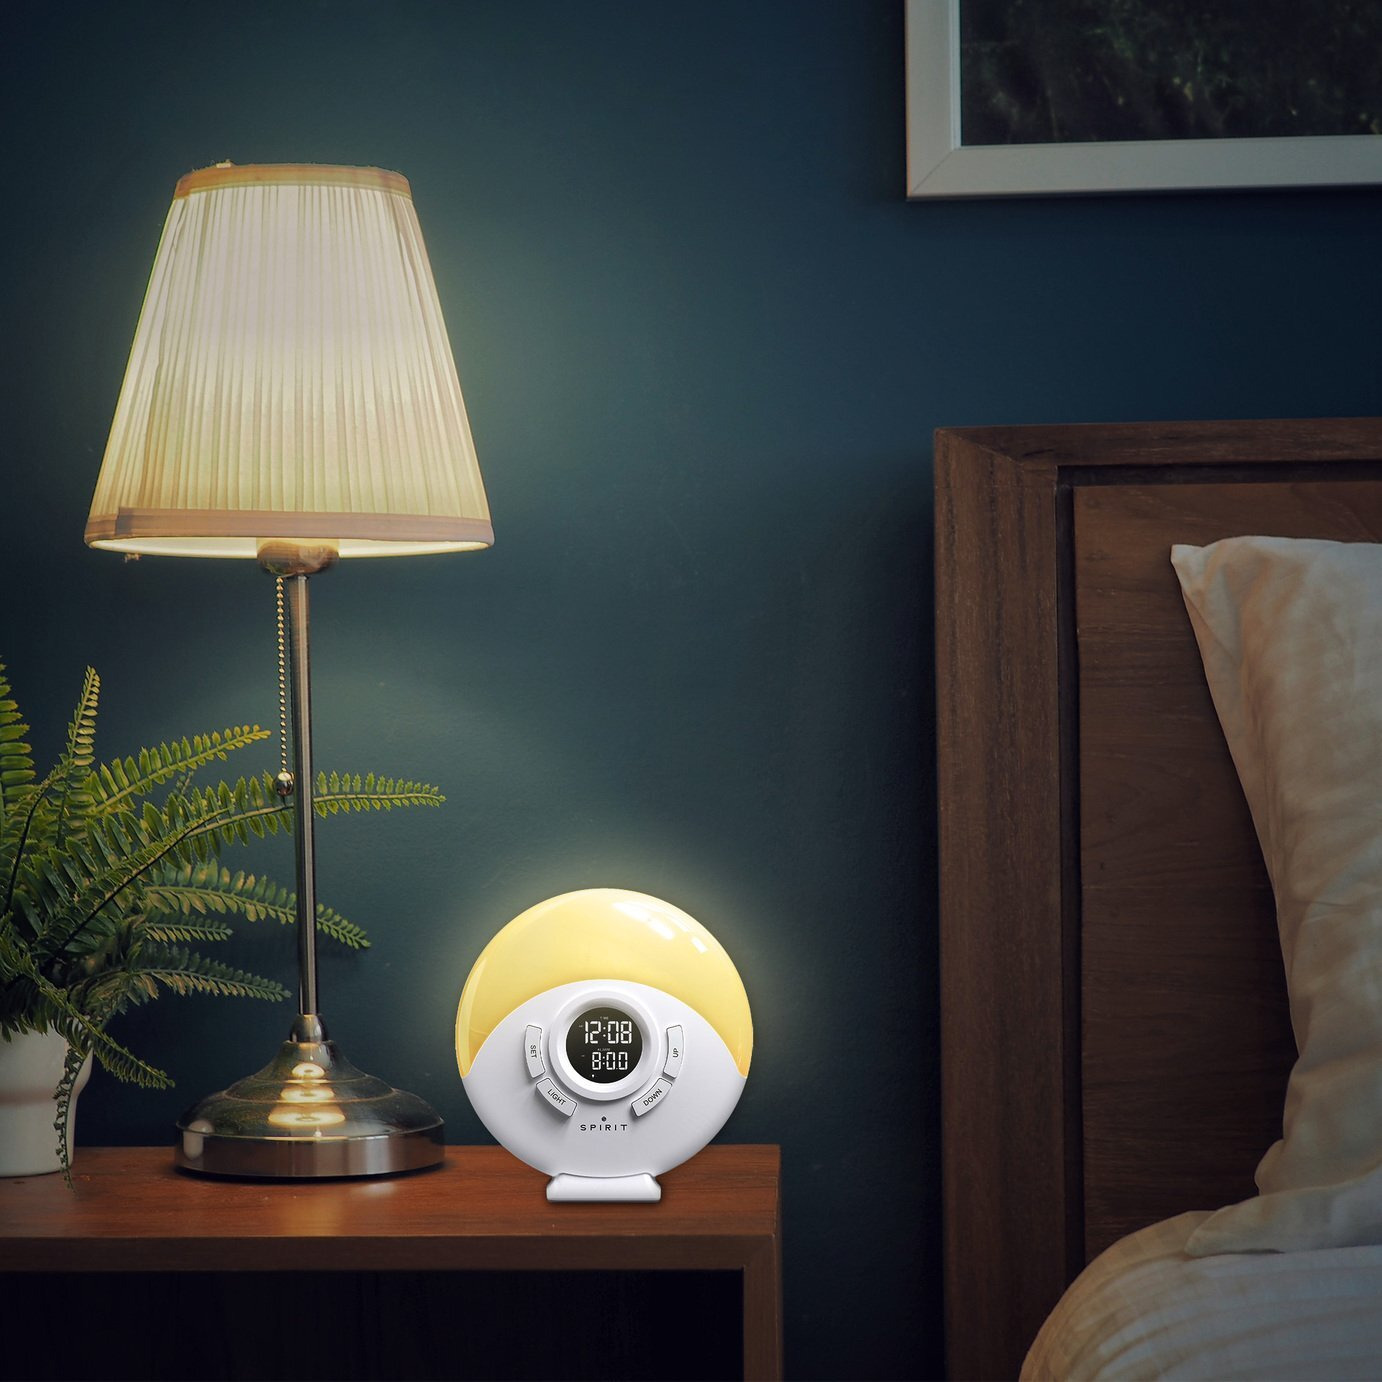 Spirit Digital LED Wakeup Light Alarm Clock - White by Habitat